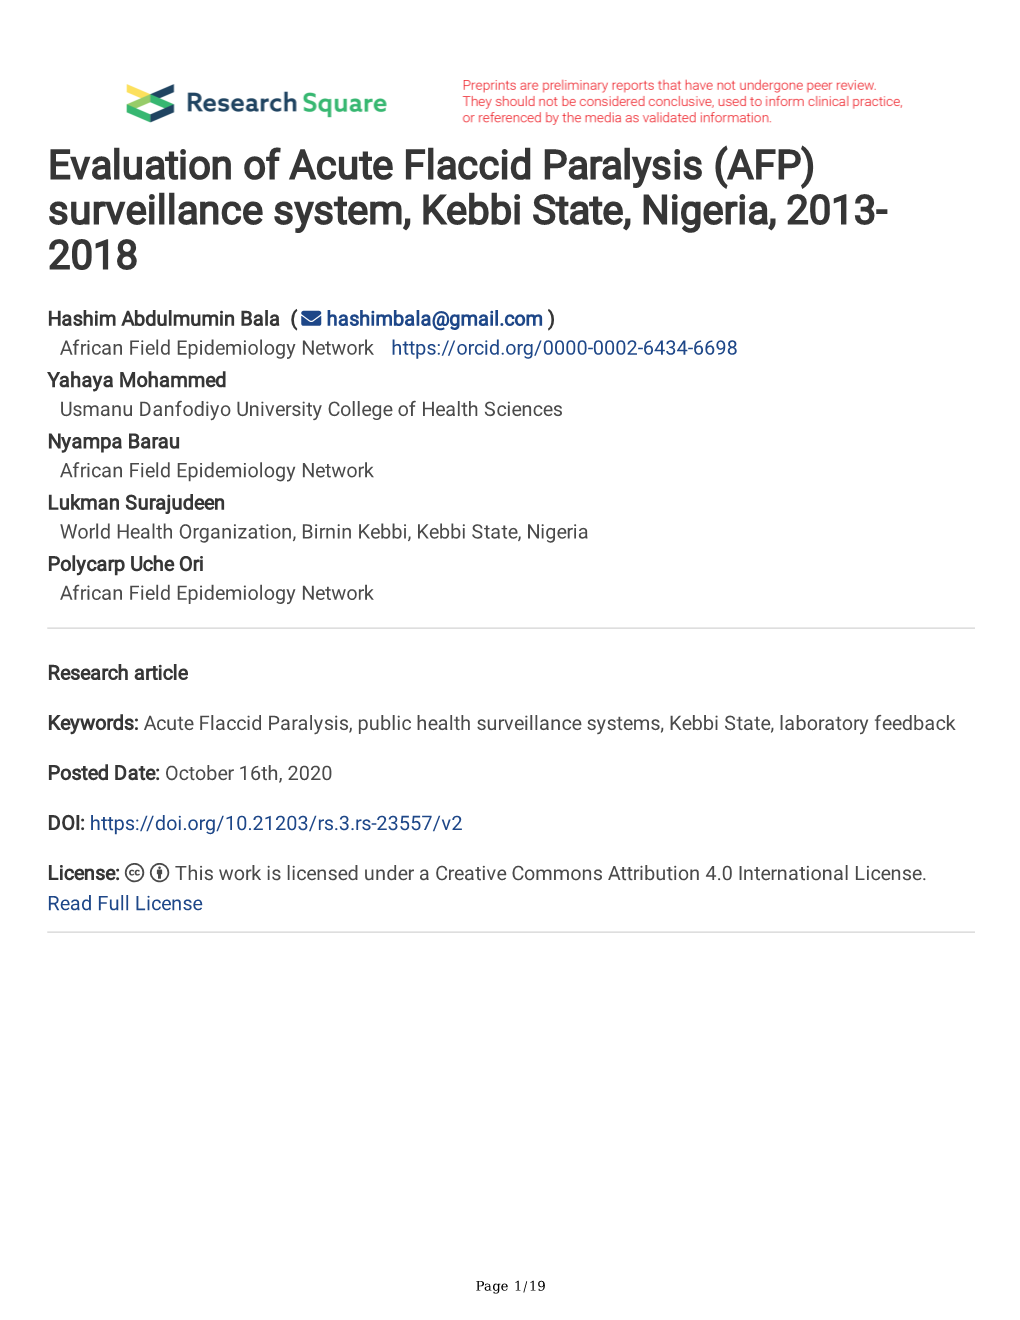 (AFP) Surveillance System, Kebbi State, Nigeria, 2013- 2018